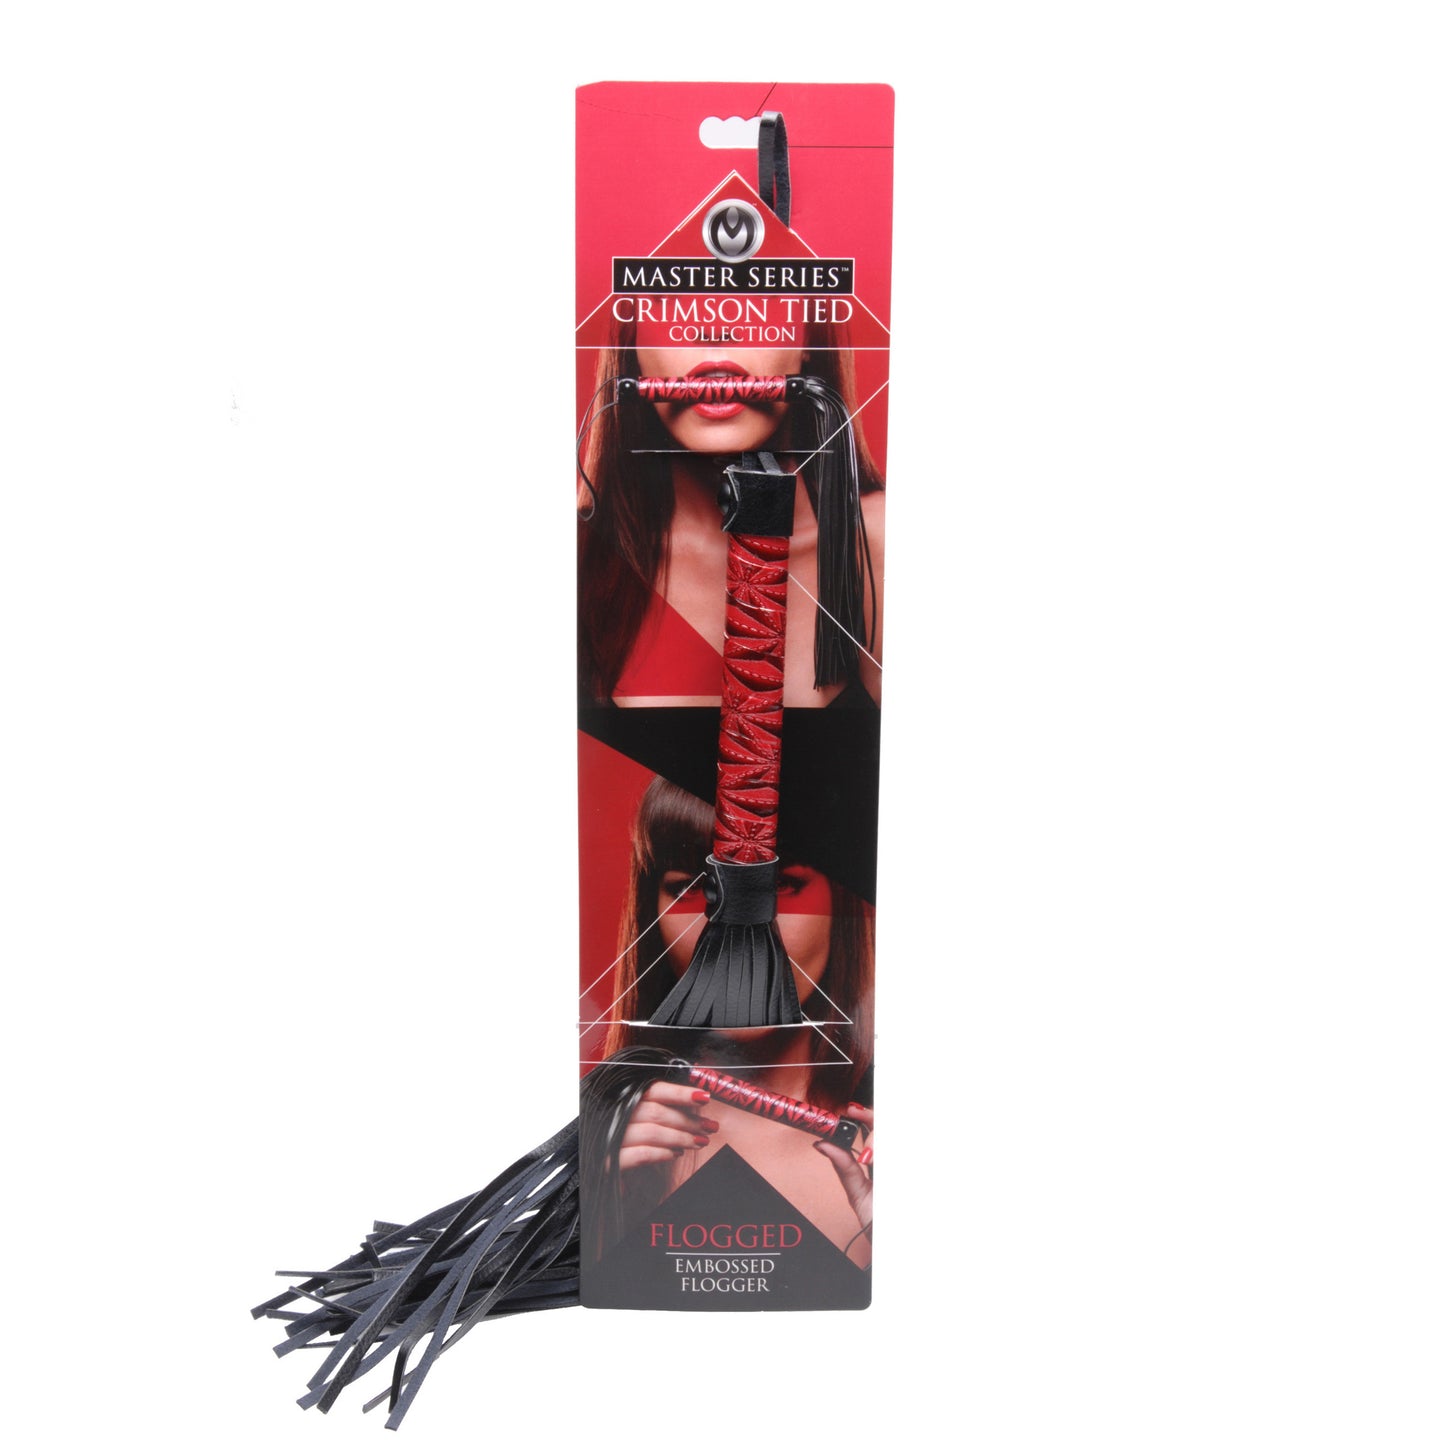 Crimson Tied Embossed Flogger - UABDSM